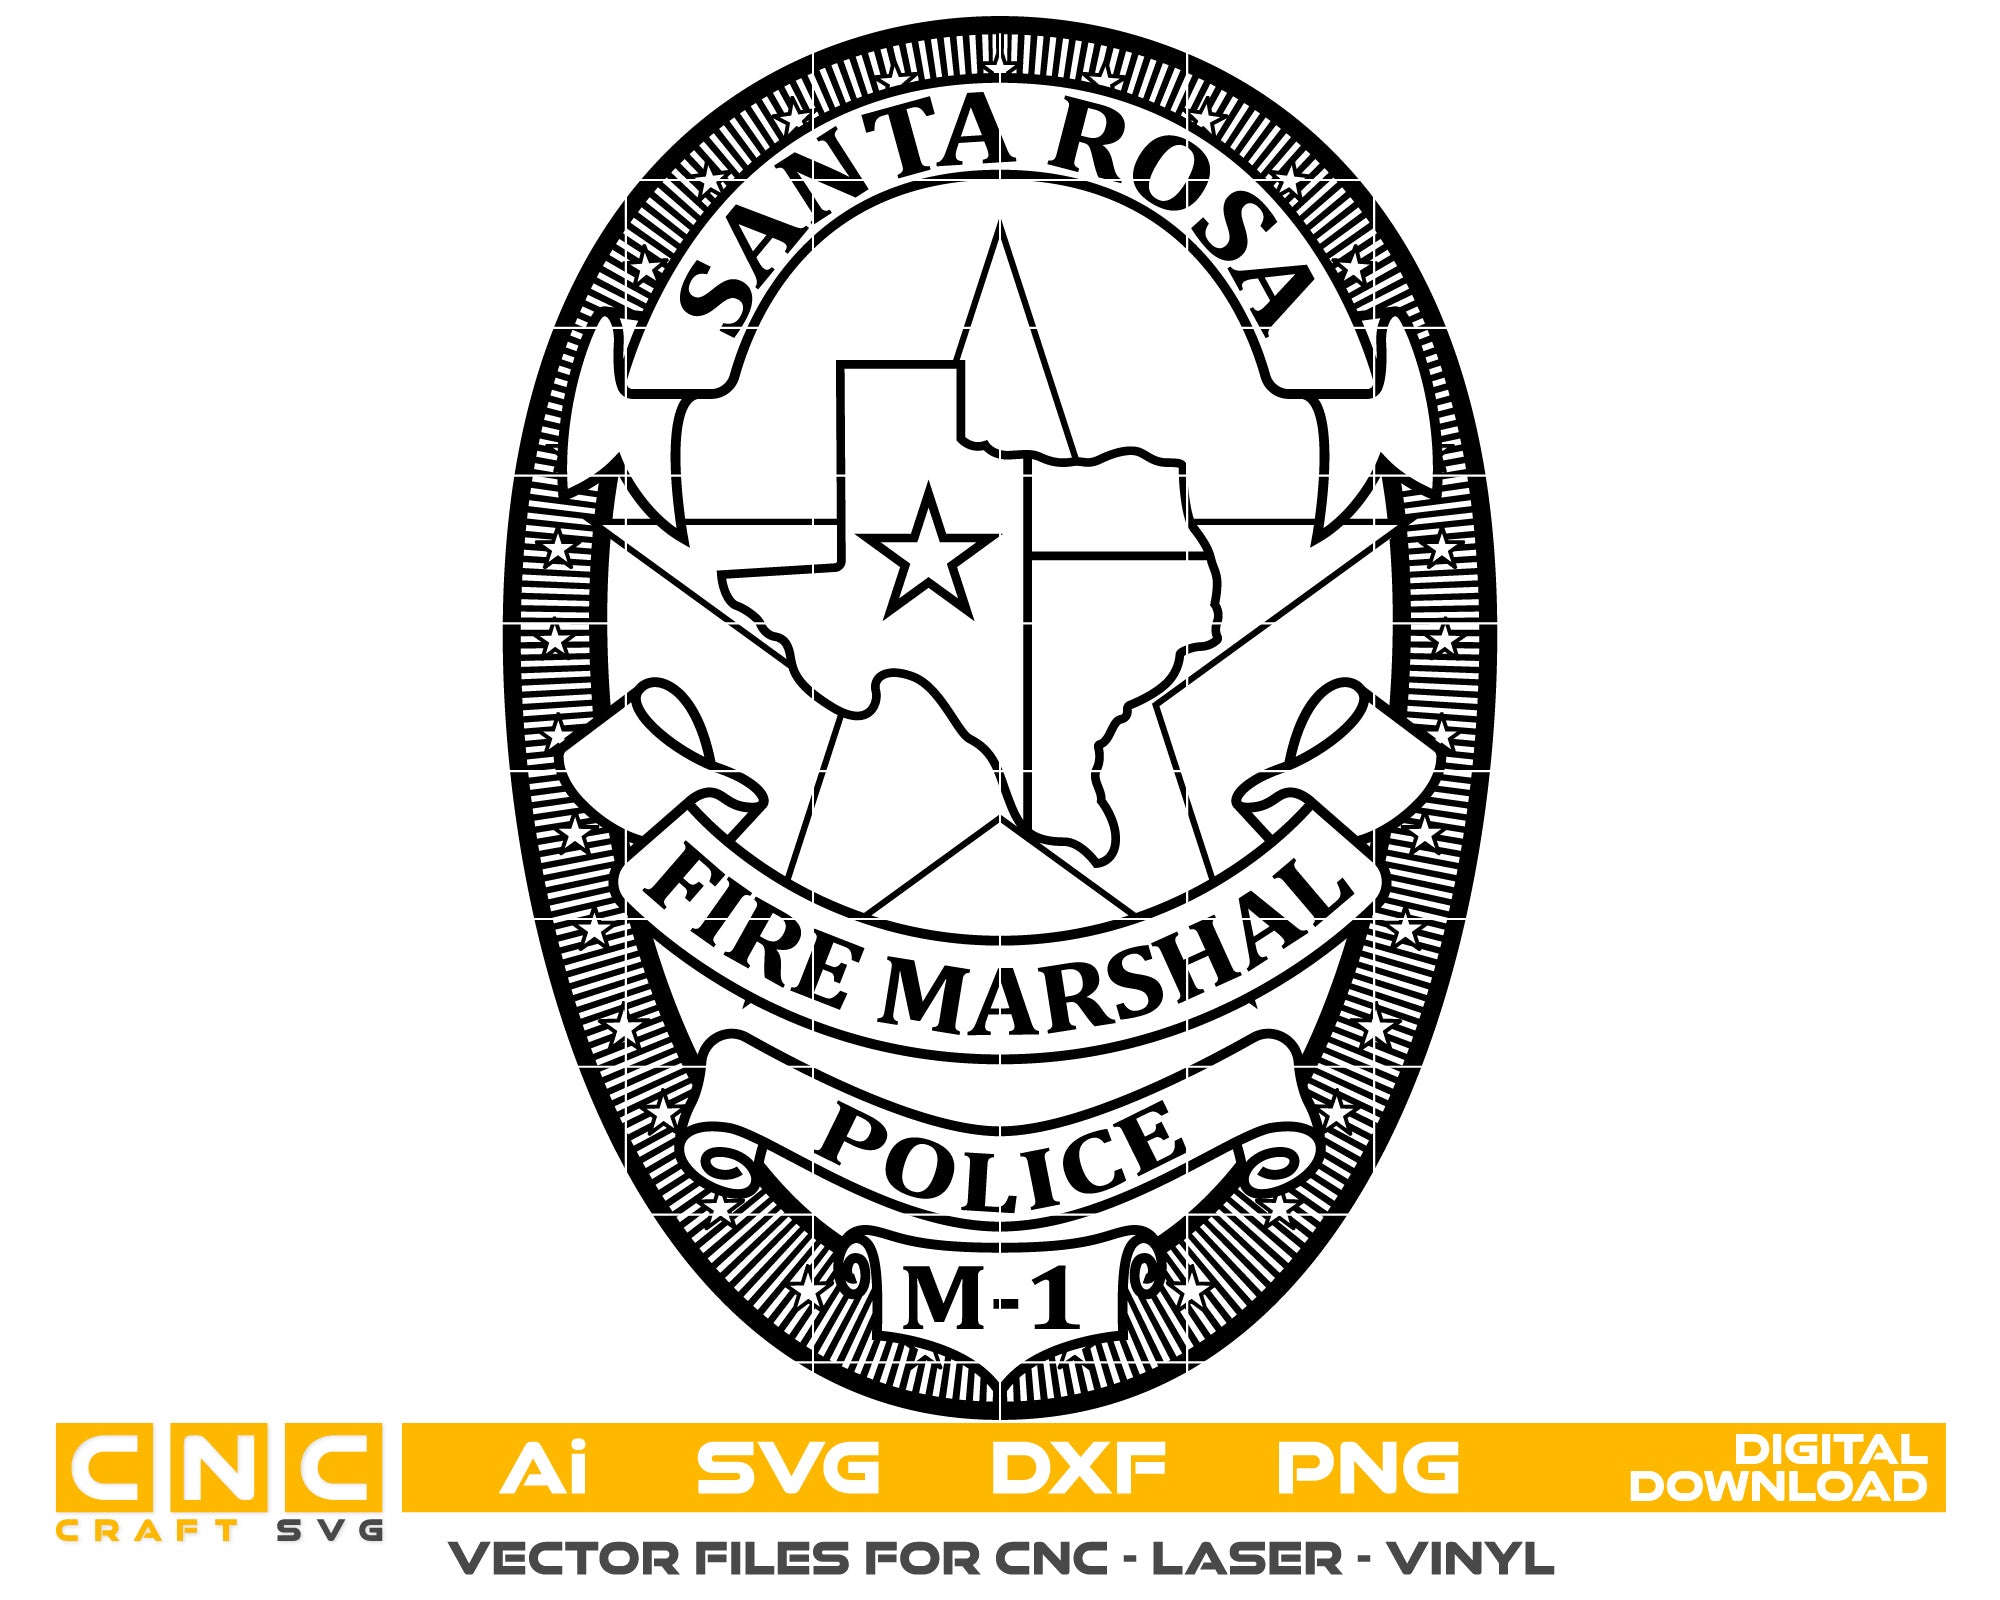 Santa Rosa Fire Marshal Police Badge vector art